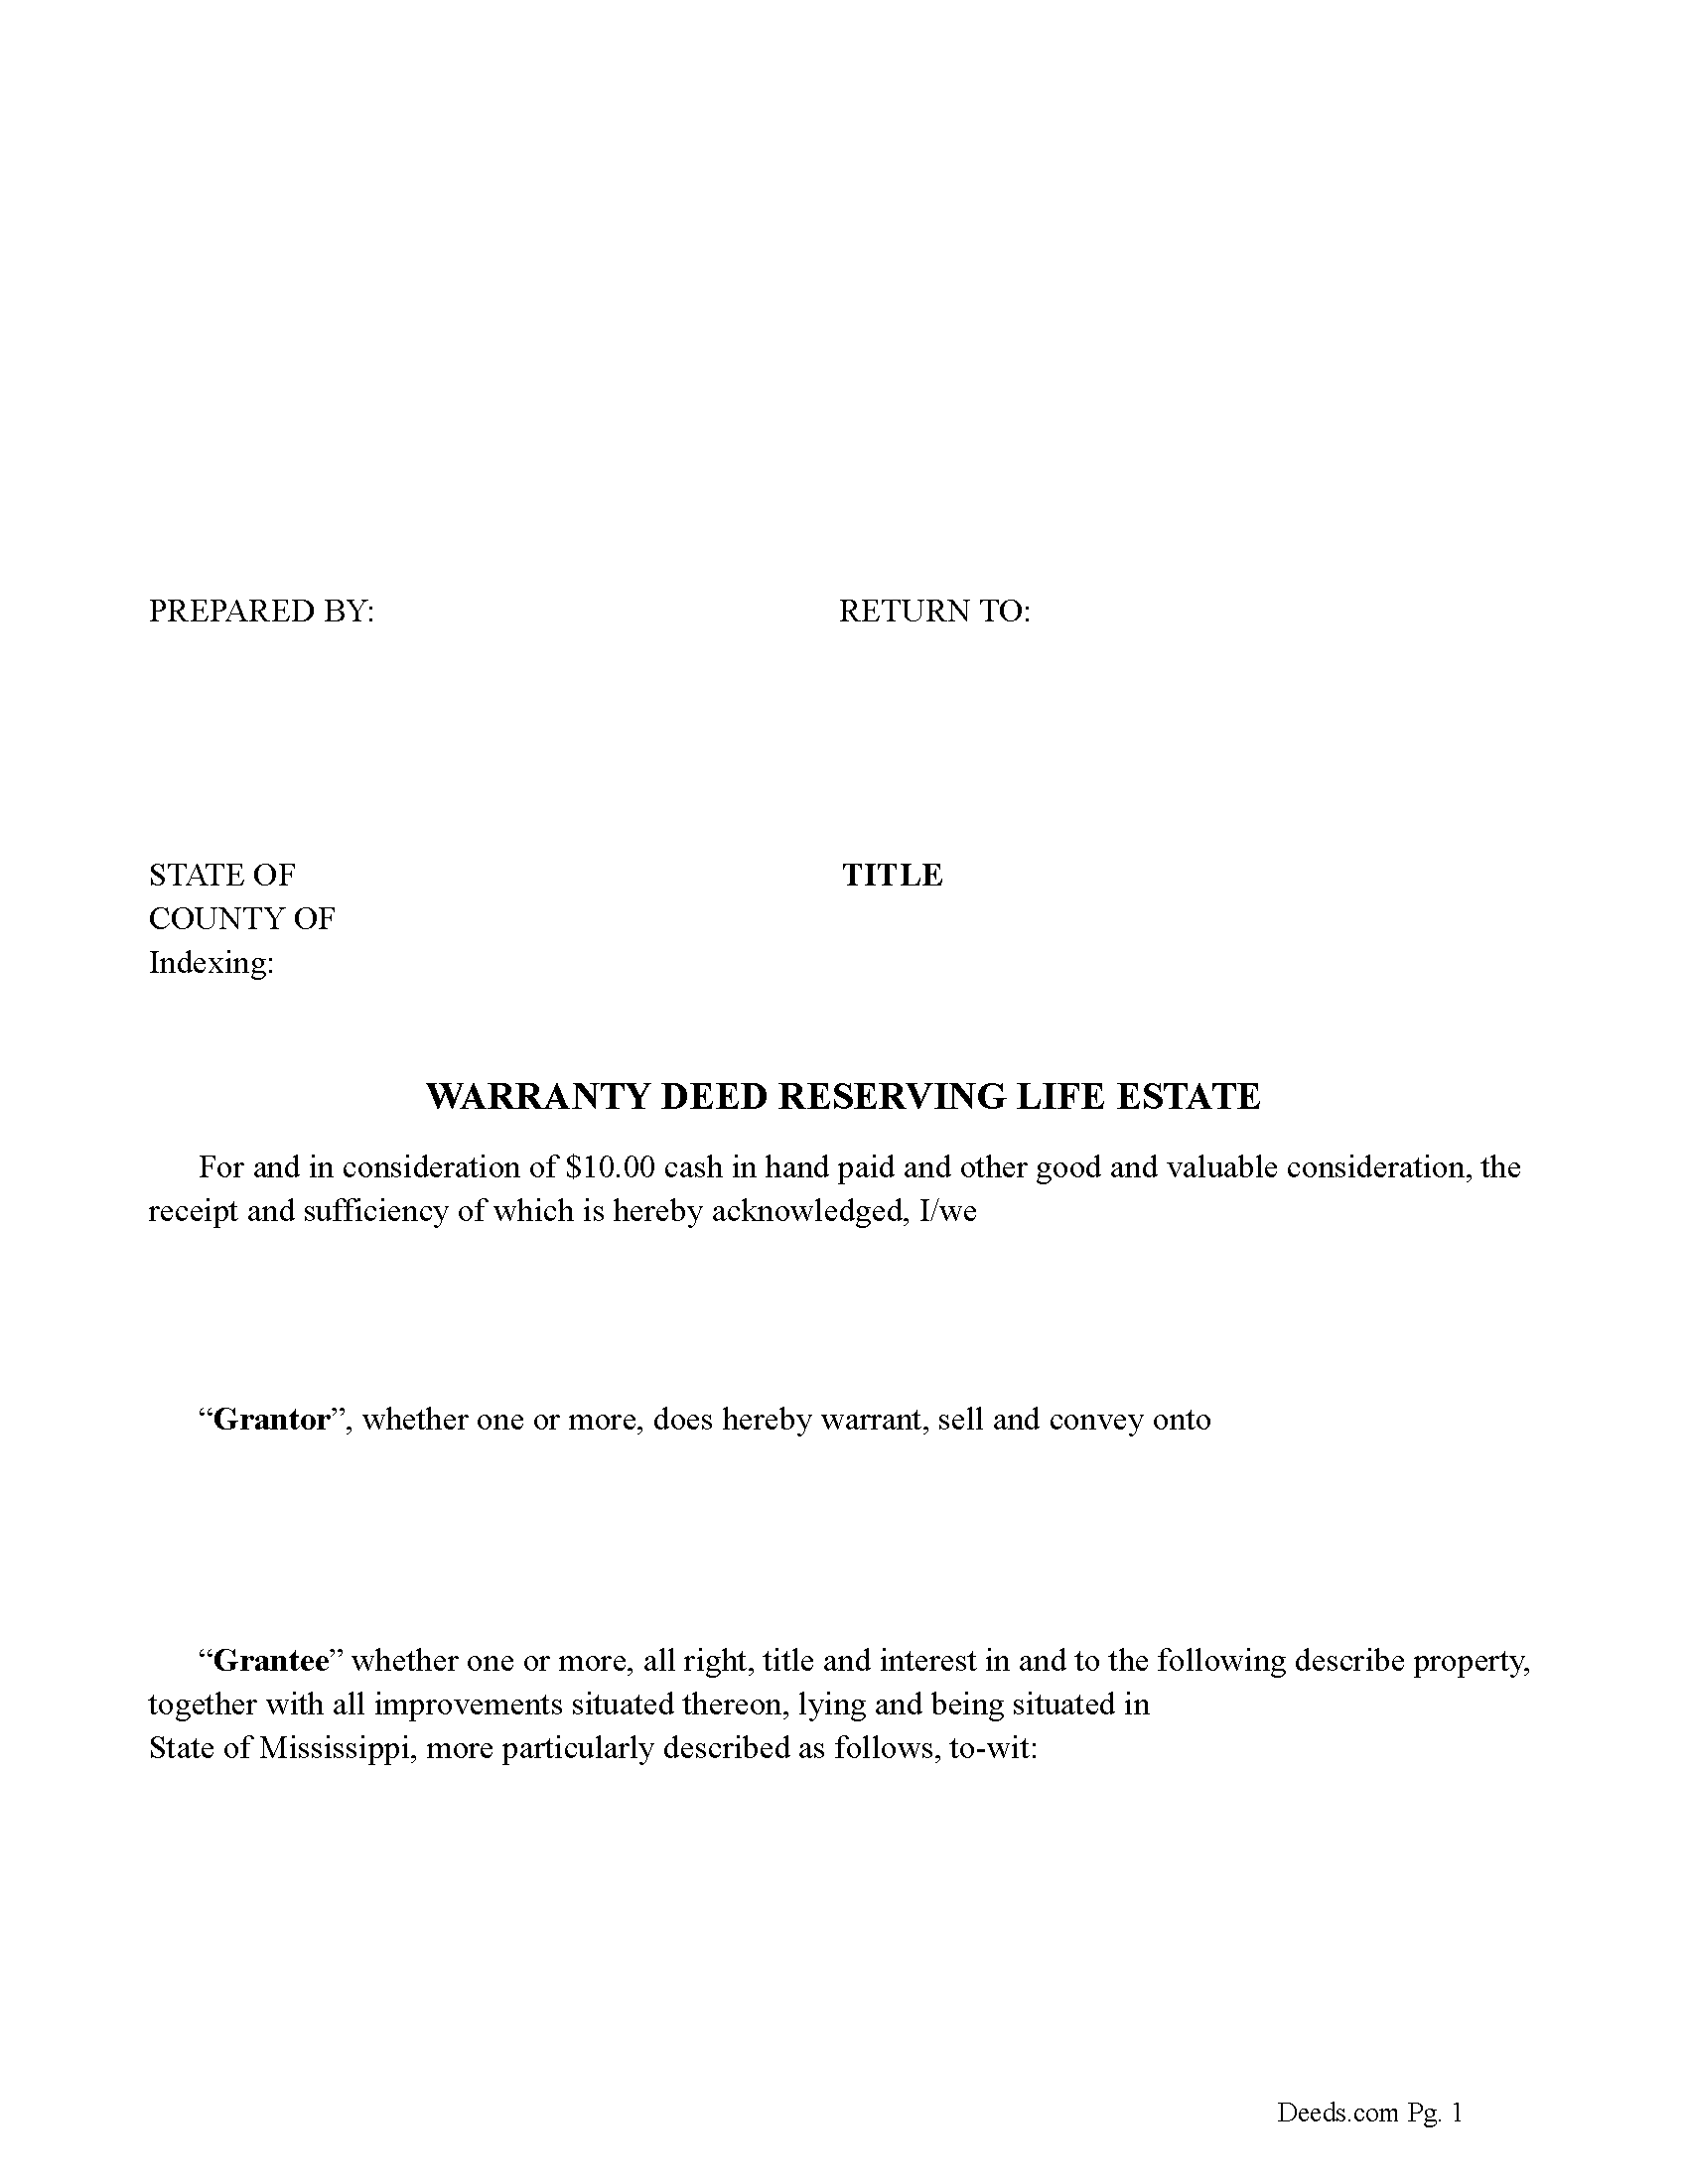 Warranty Deed Reserving Life Estate Form